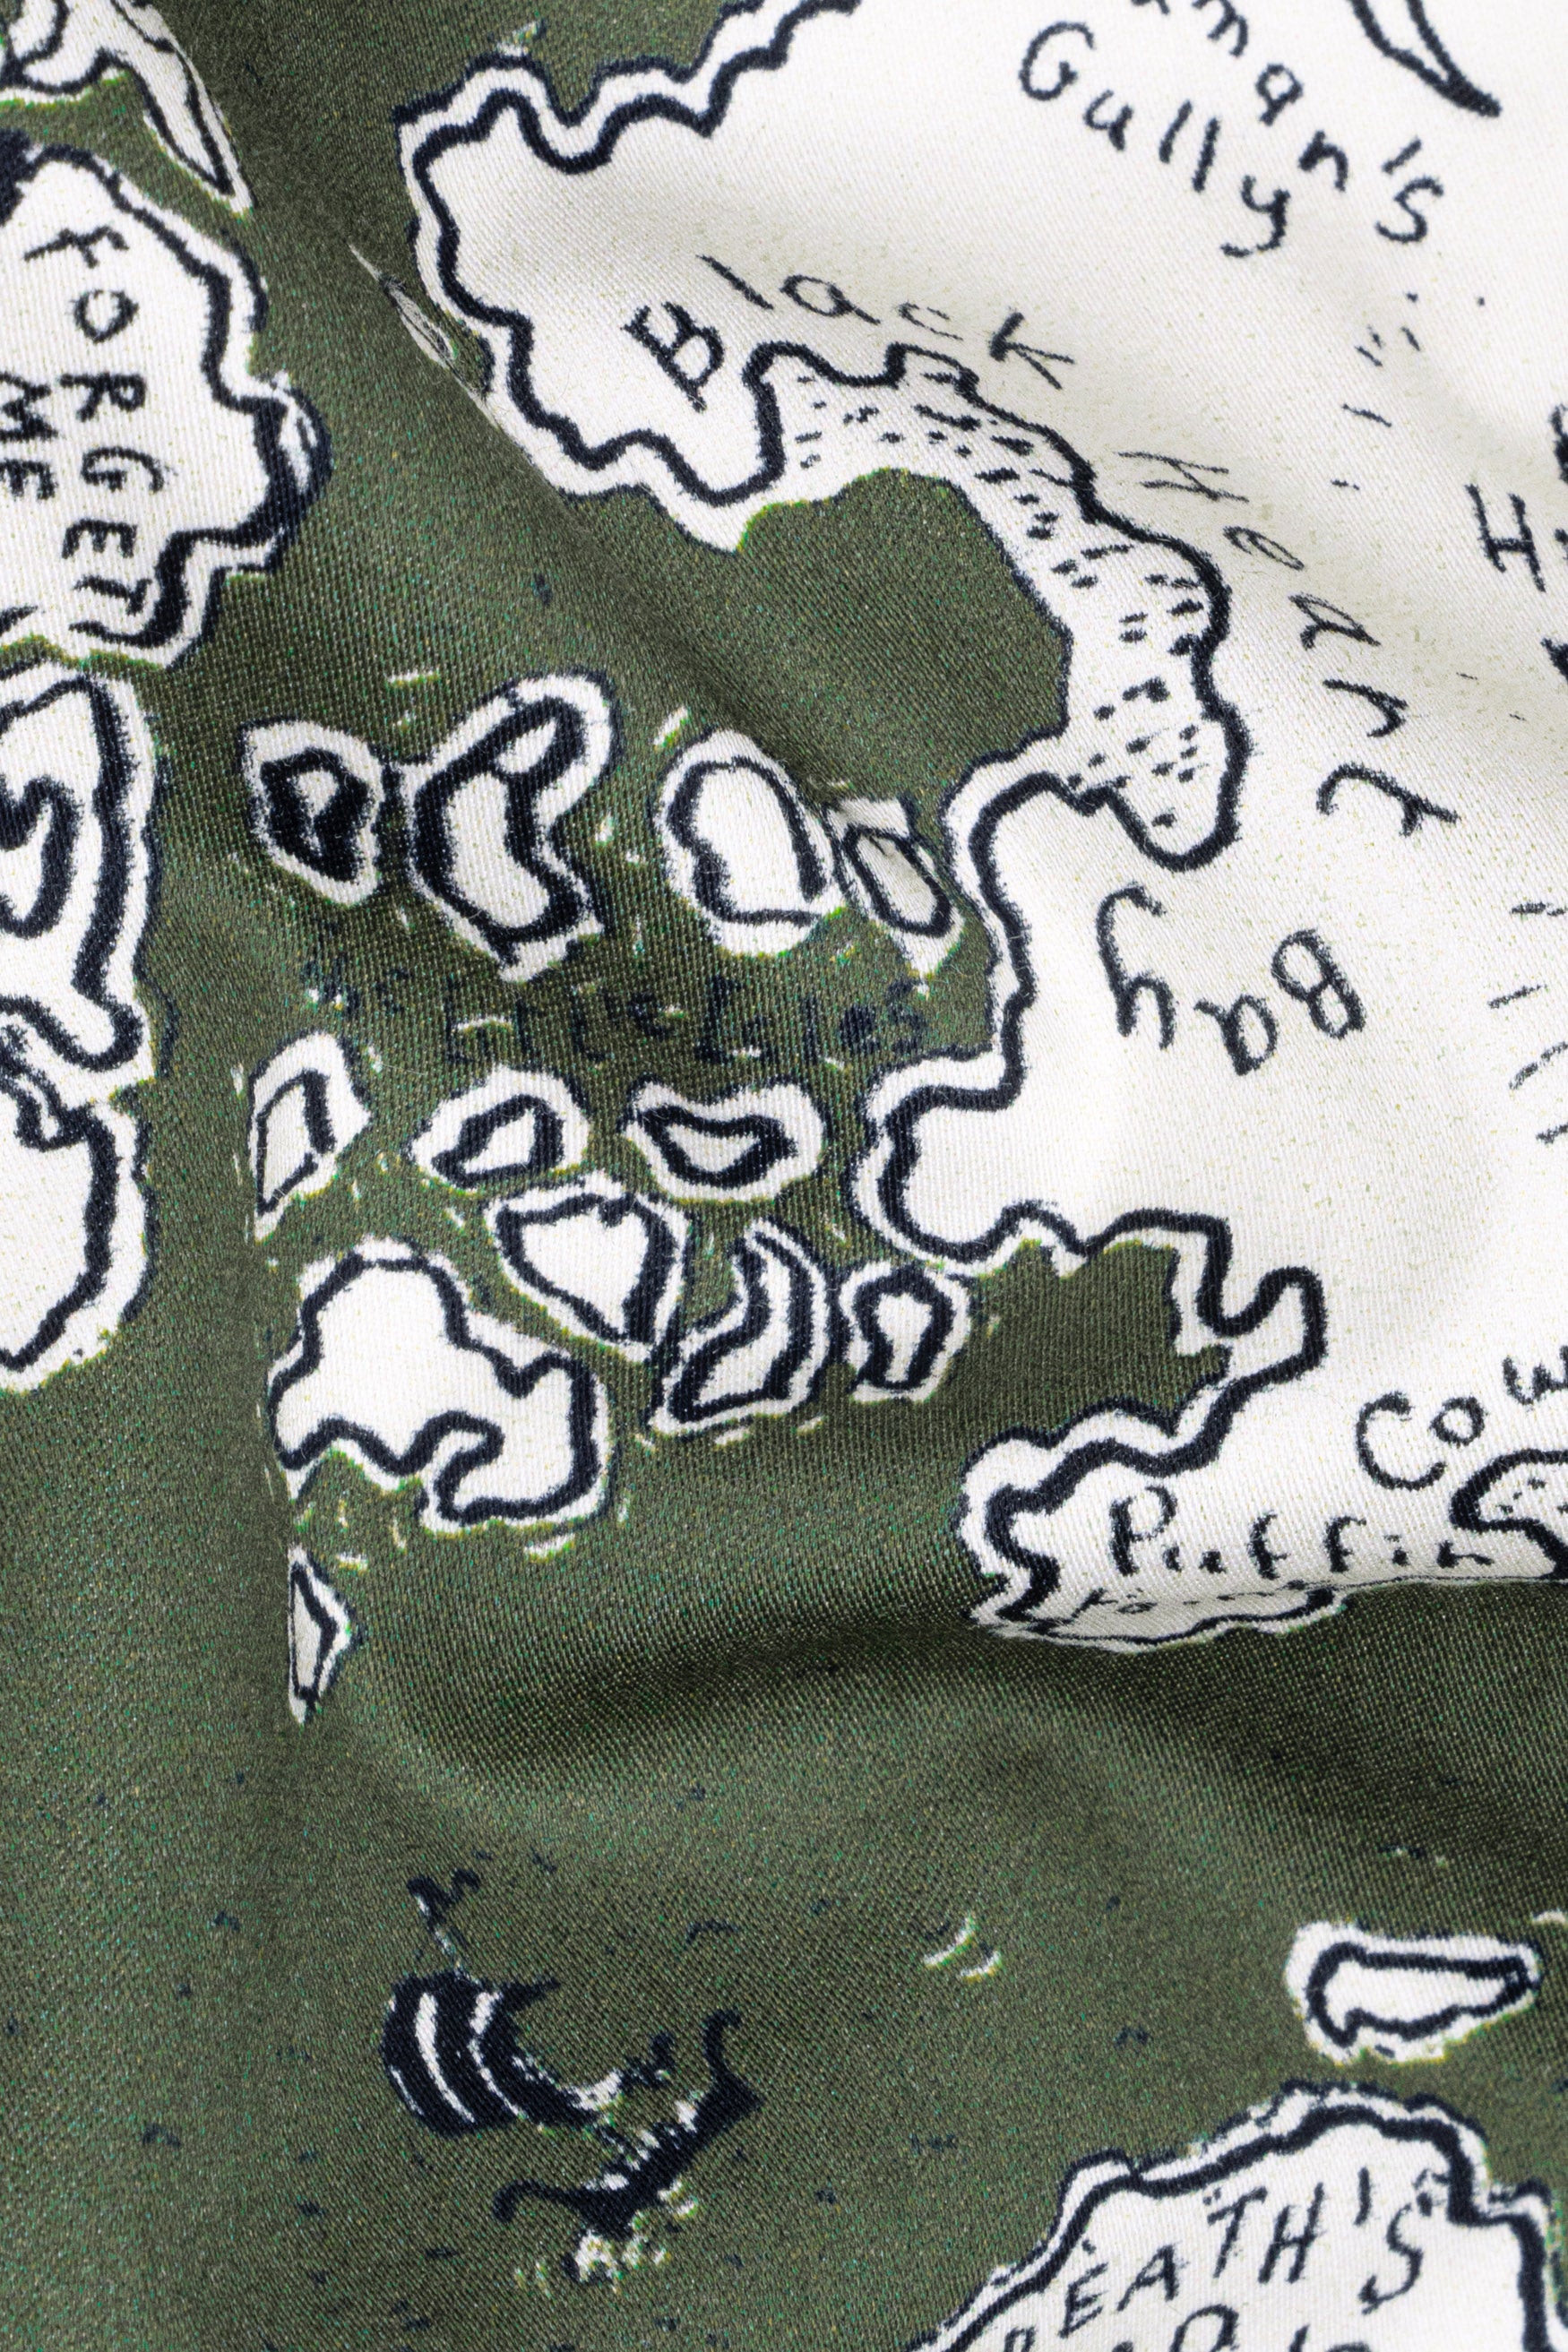 Dune Green and Spring Cream Map Printed Subtle Sheen Super Soft Premium Cotton Designer Shirt 12252-38, 12252-H-38, 12252-39, 12252-H-39, 12252-40, 12252-H-40, 12252-42, 12252-H-42, 12252-44, 12252-H-44, 12252-46, 12252-H-46, 12252-48, 12252-H-48, 12252-50, 12252-H-50, 12252-52, 12252-H-52